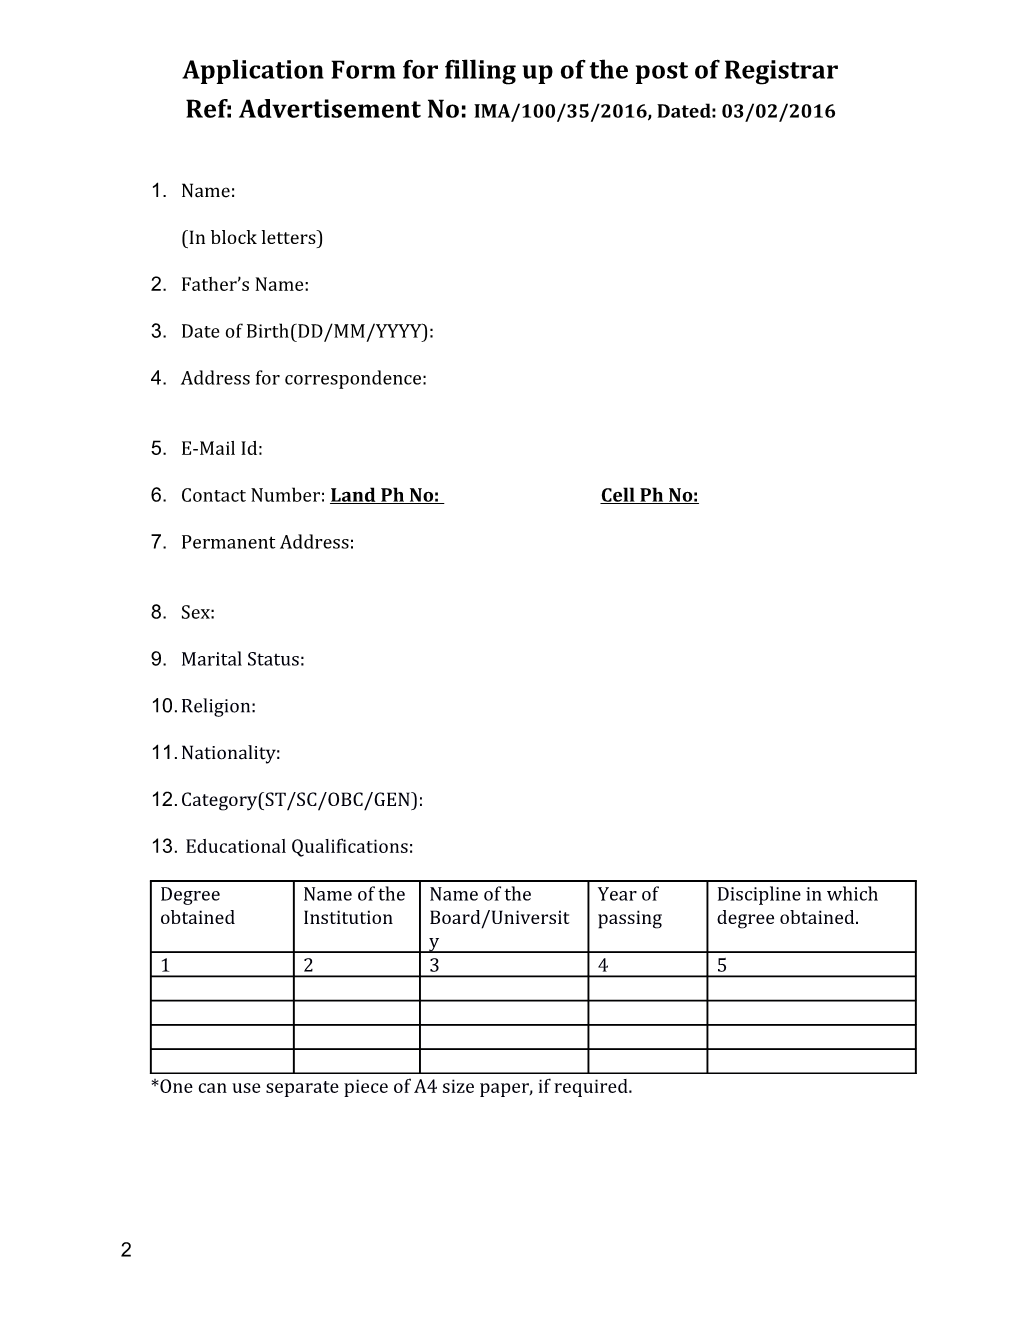 Application Form for Filling up of the Post of Registrar